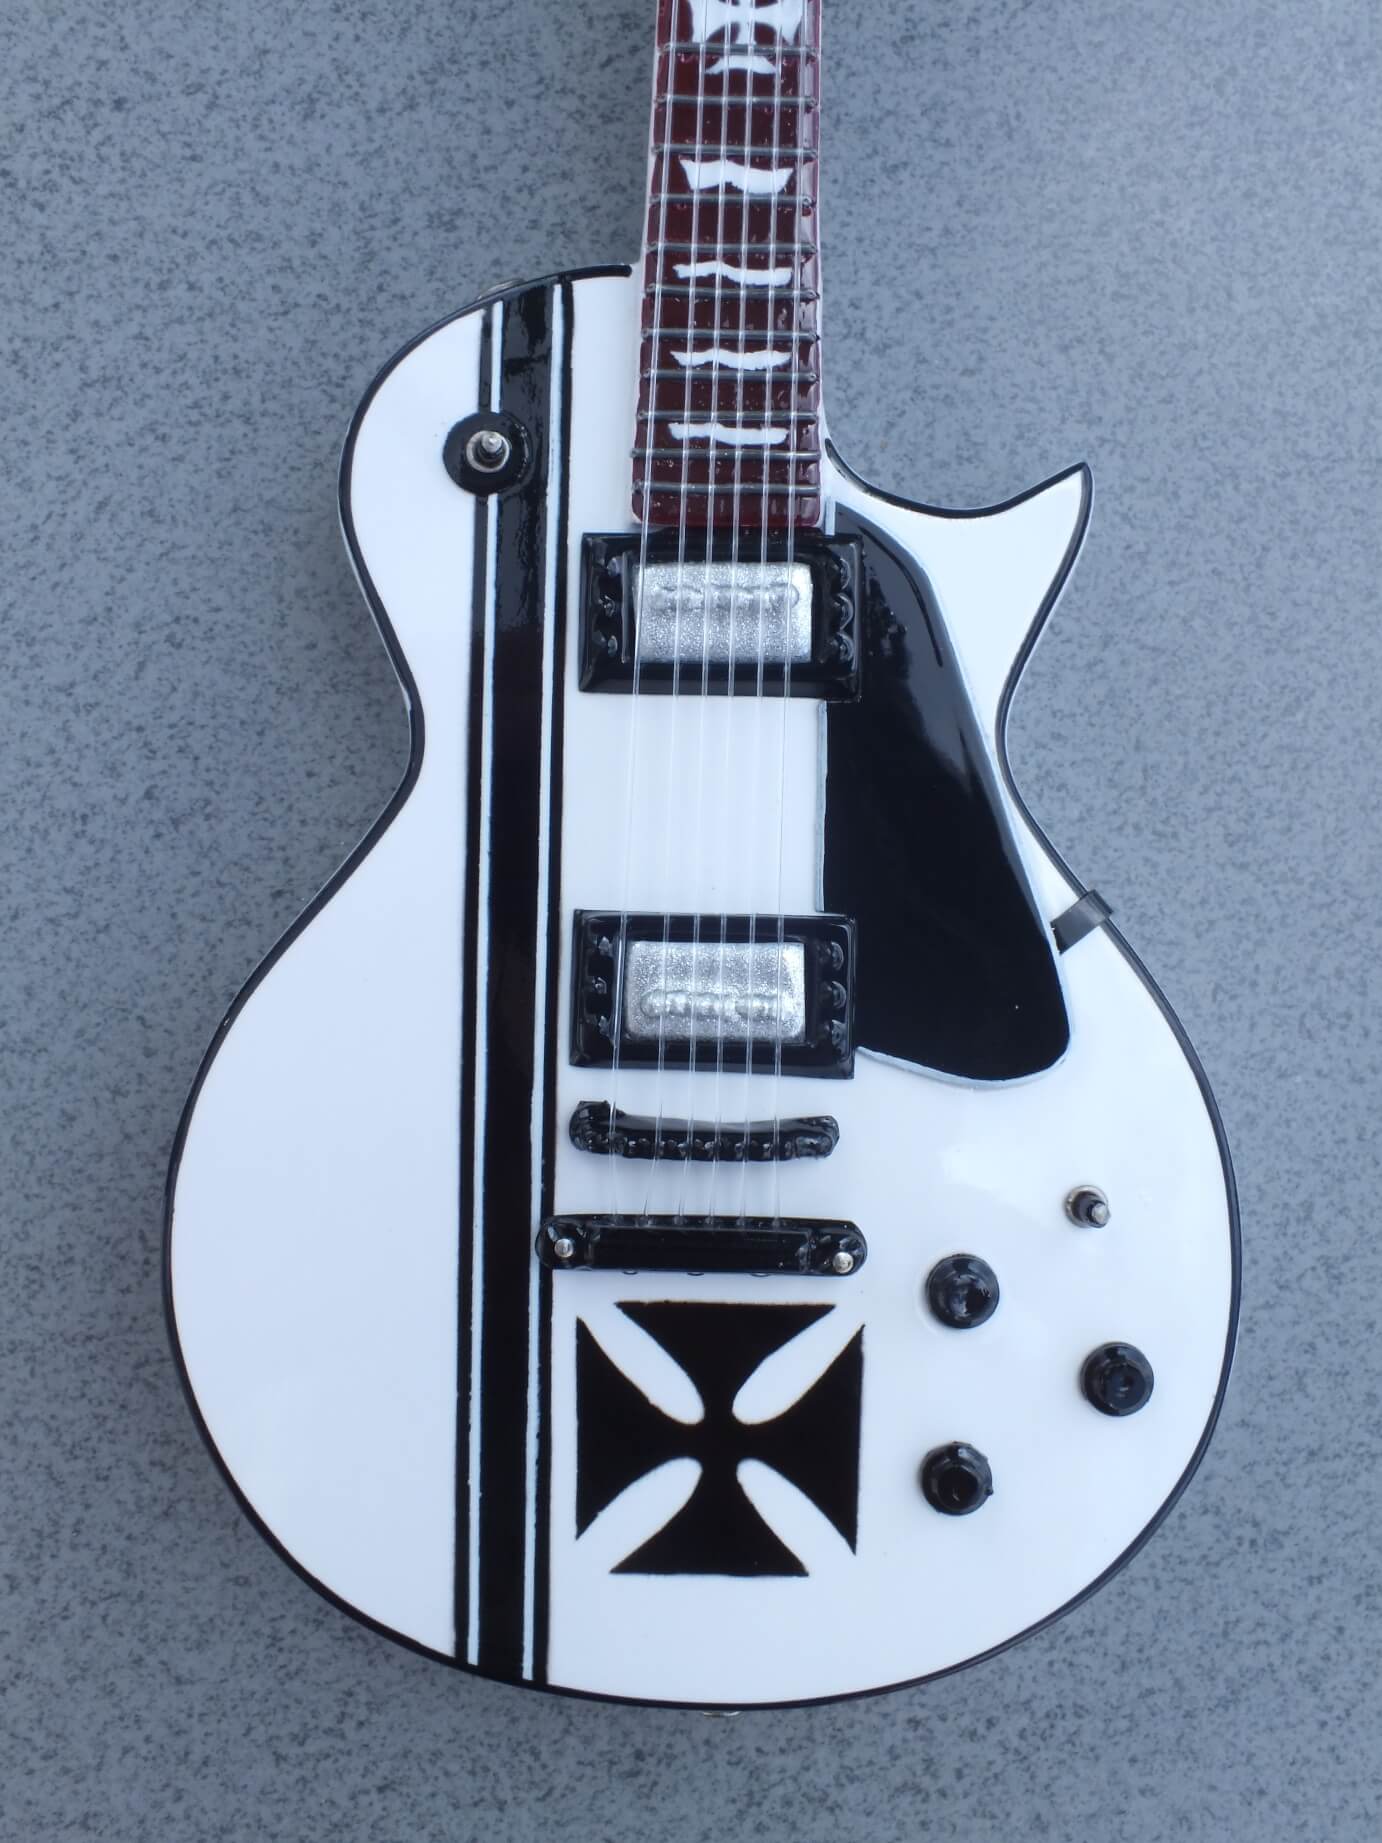 Miniature Guitar Metallica James Hetfield Iron Cross Gibson Style